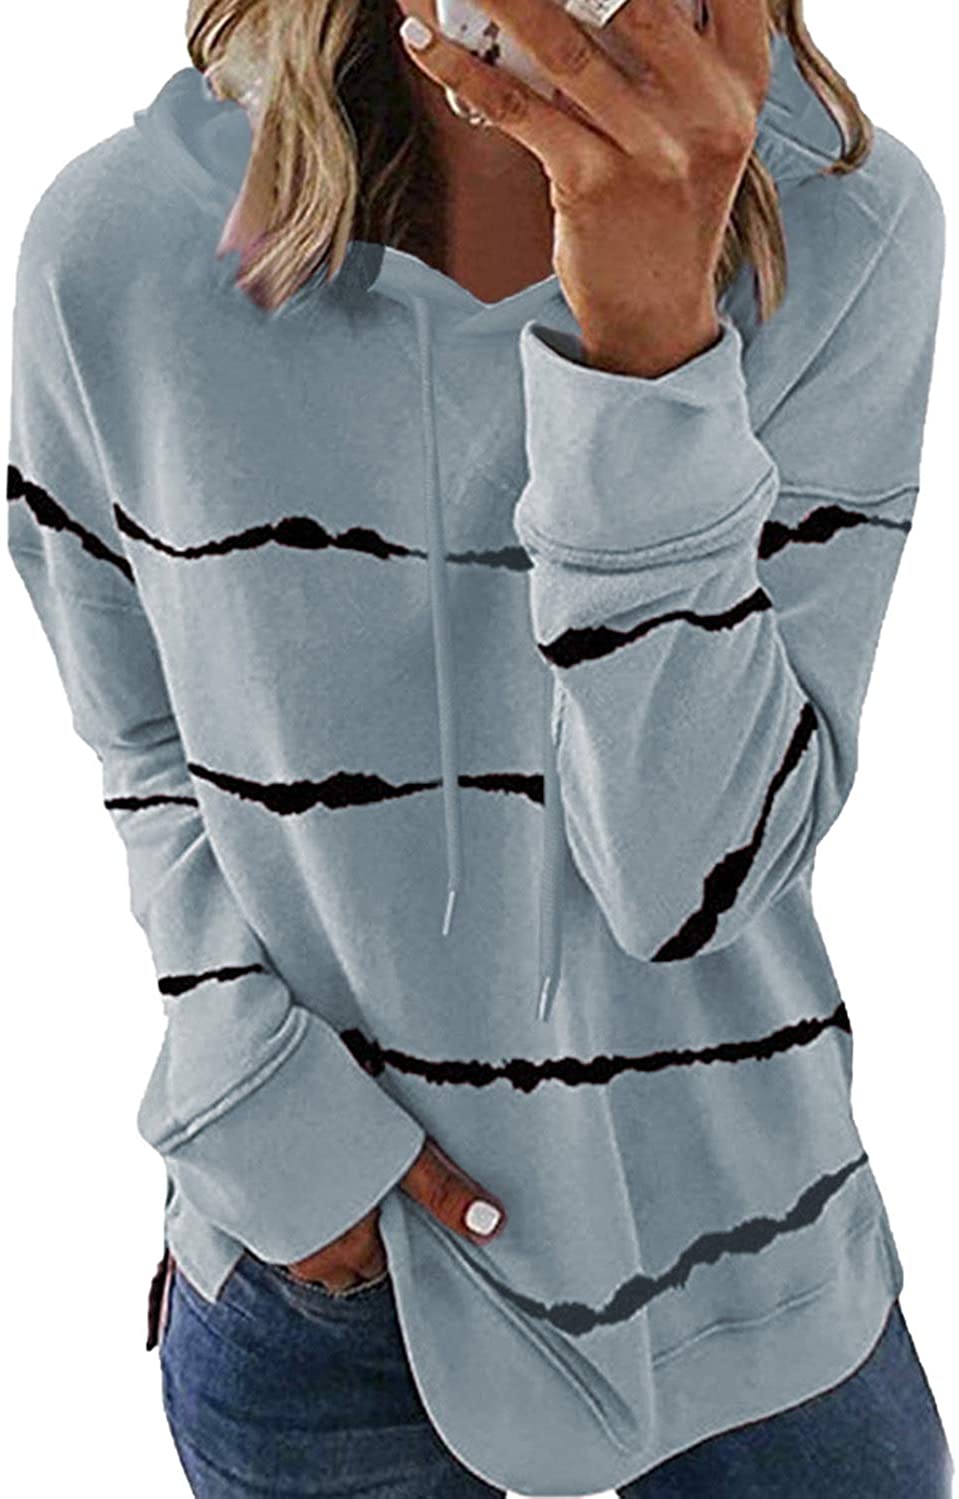 KINGFEN Lightweight Sweatshirts for Women Long Sleeve Striped Color Block Hoodies Tops Pullover 